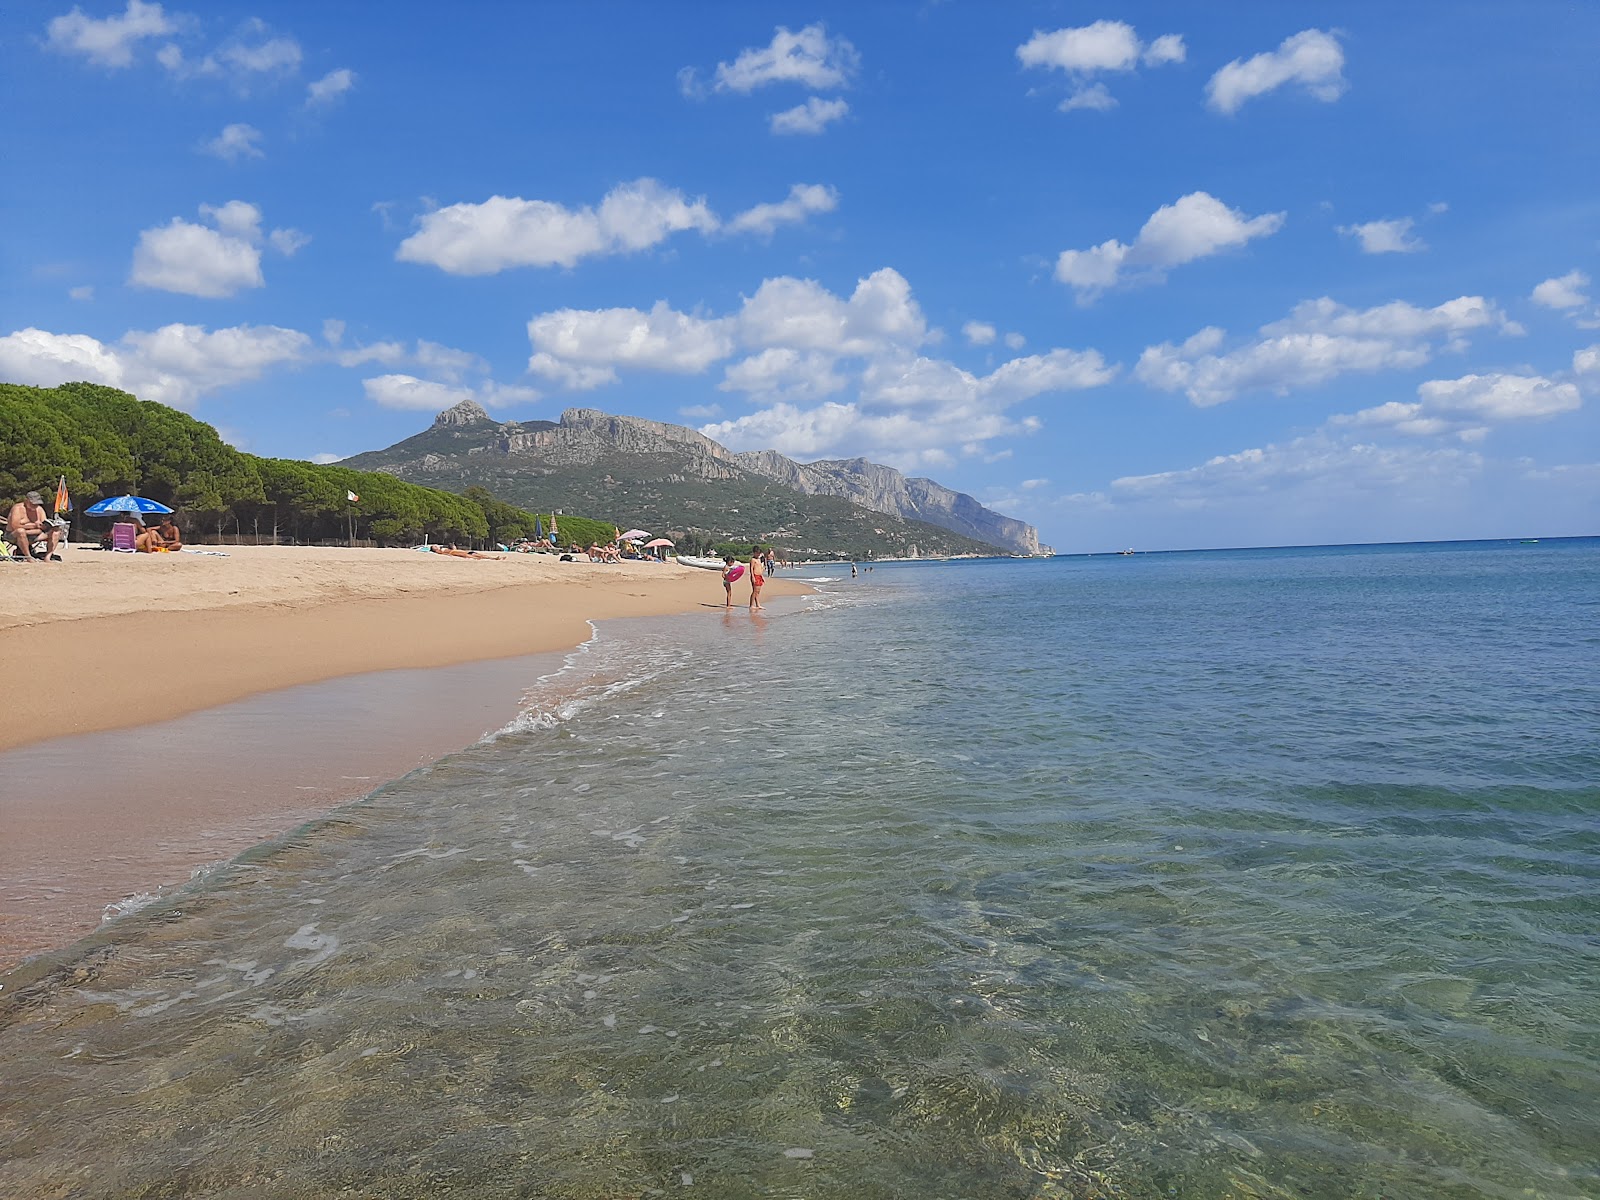 Spiaggia di Isula Manna'in fotoğrafı turkuaz saf su yüzey ile